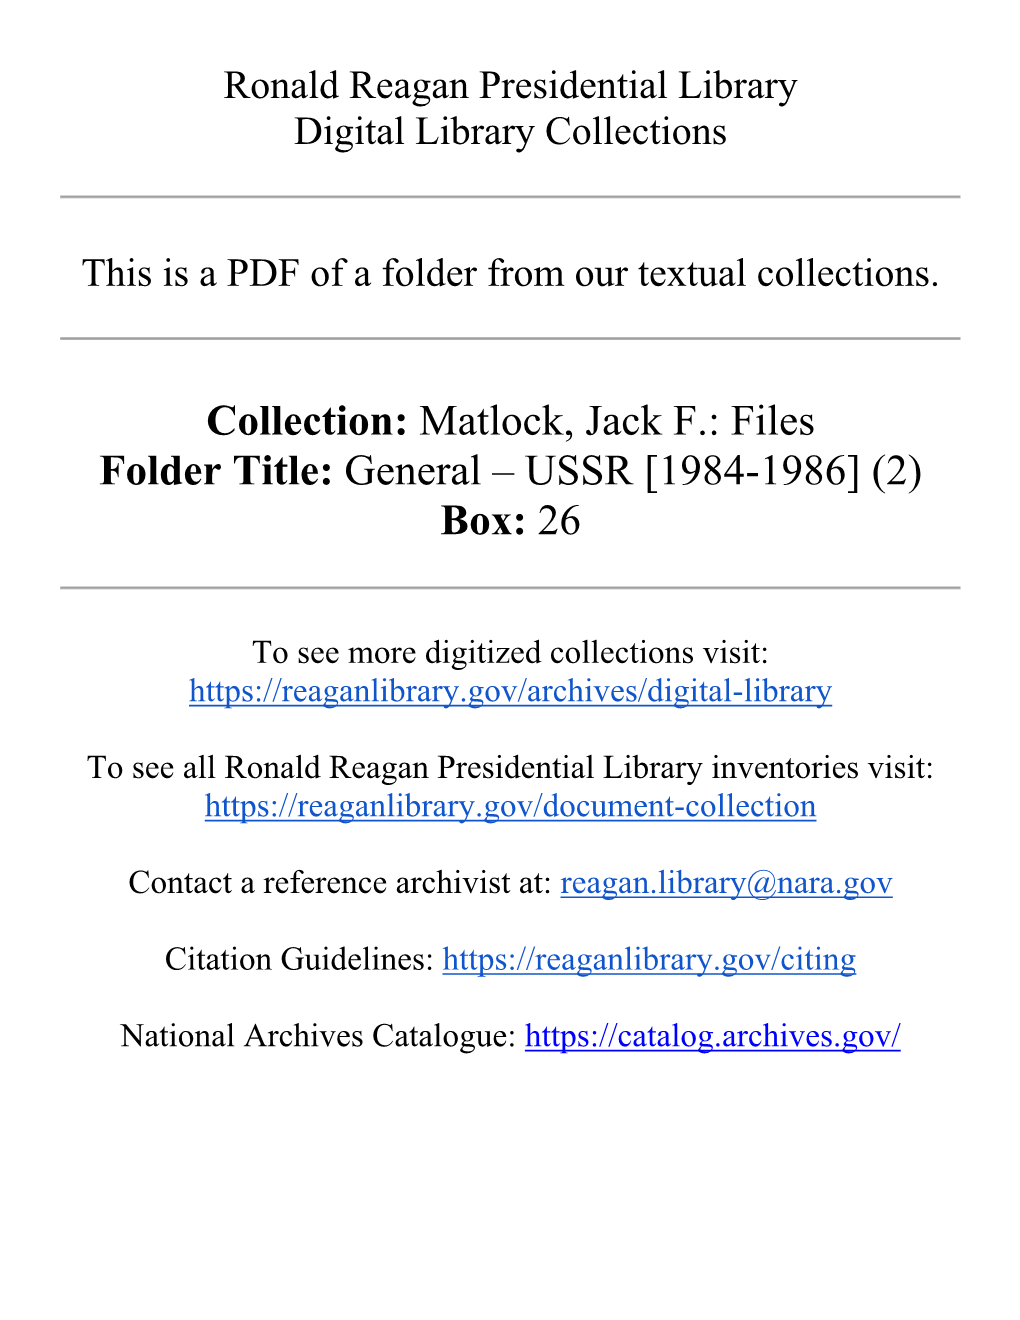 Matlock, Jack F.: Files Folder Title: General – USSR [1984-1986] (2) Box: 26